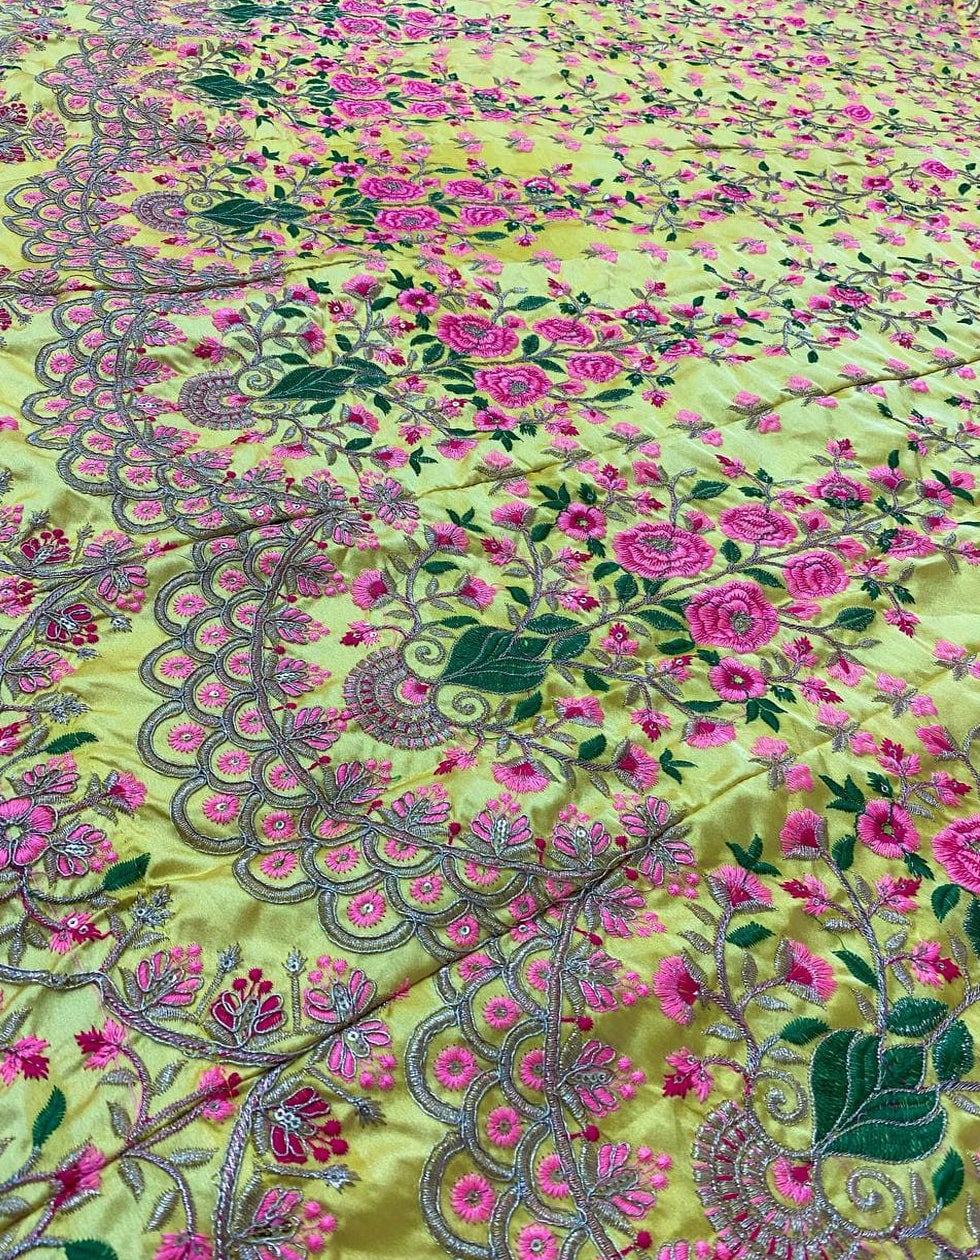 Designer Yellow Satin Silk Floral Embroidery Lehenga Choli